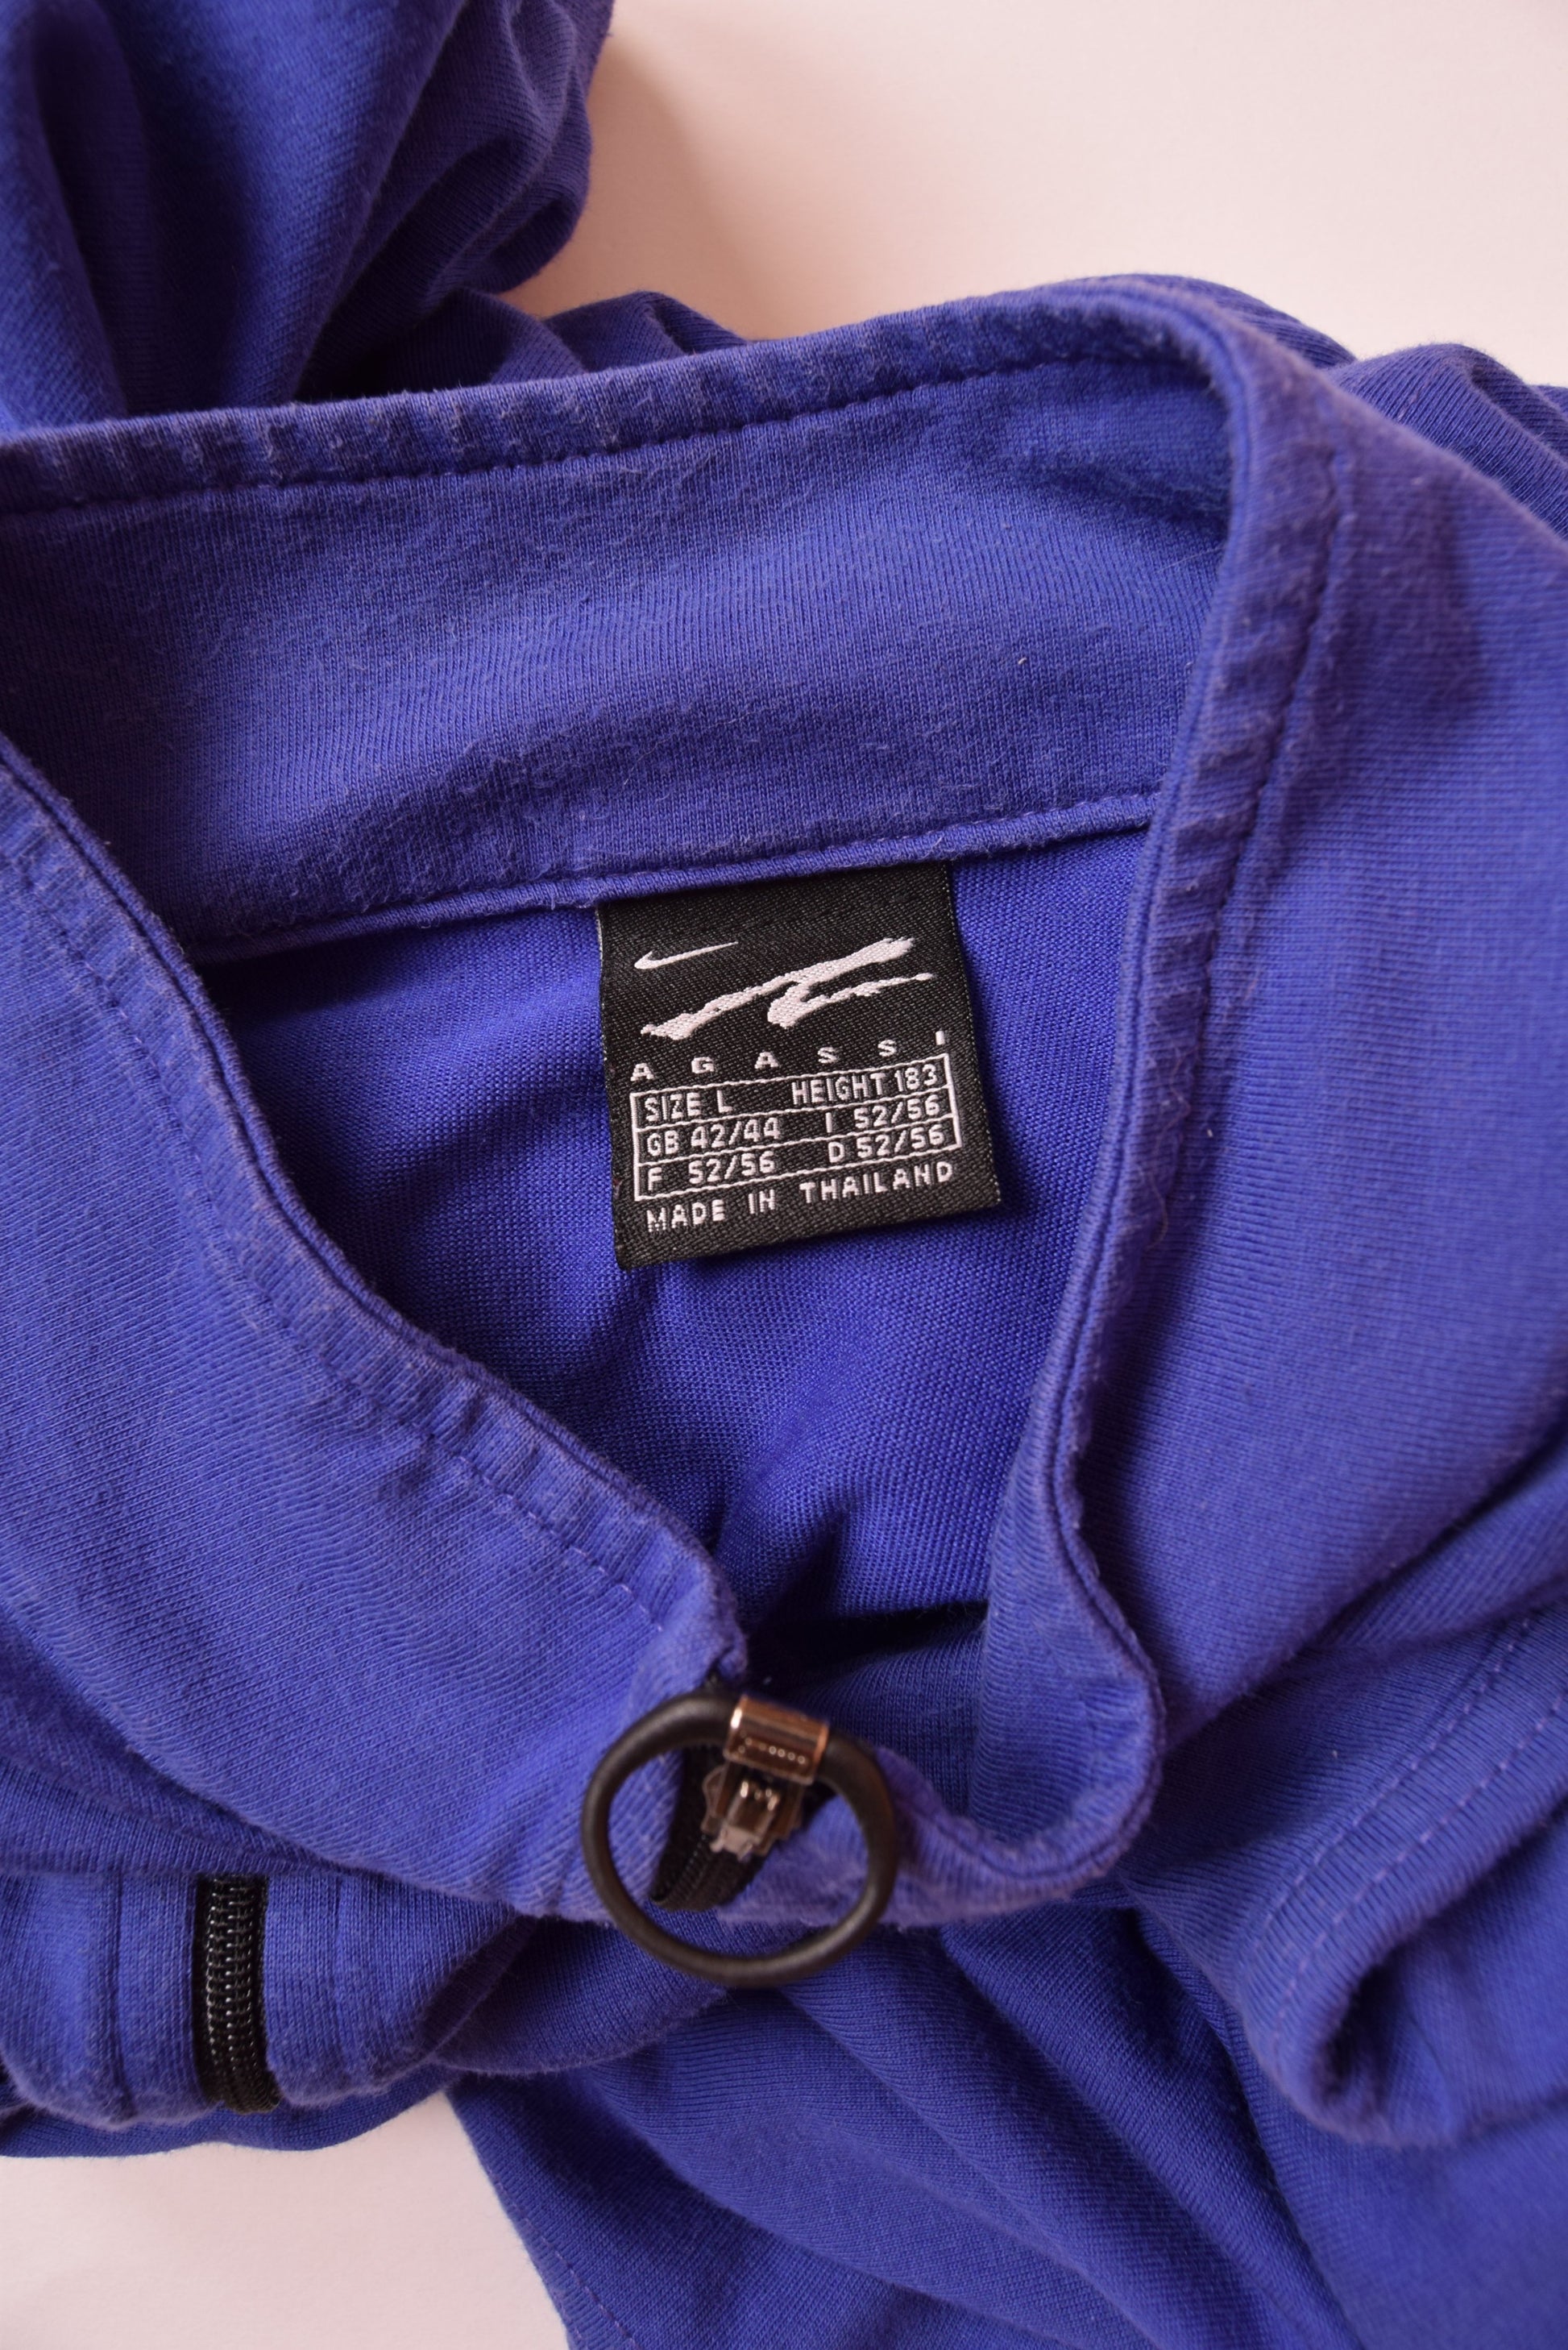 Vintage Nike Andre Agassi Tennis Shirt 90's Size L Dri F.I.T. Blue